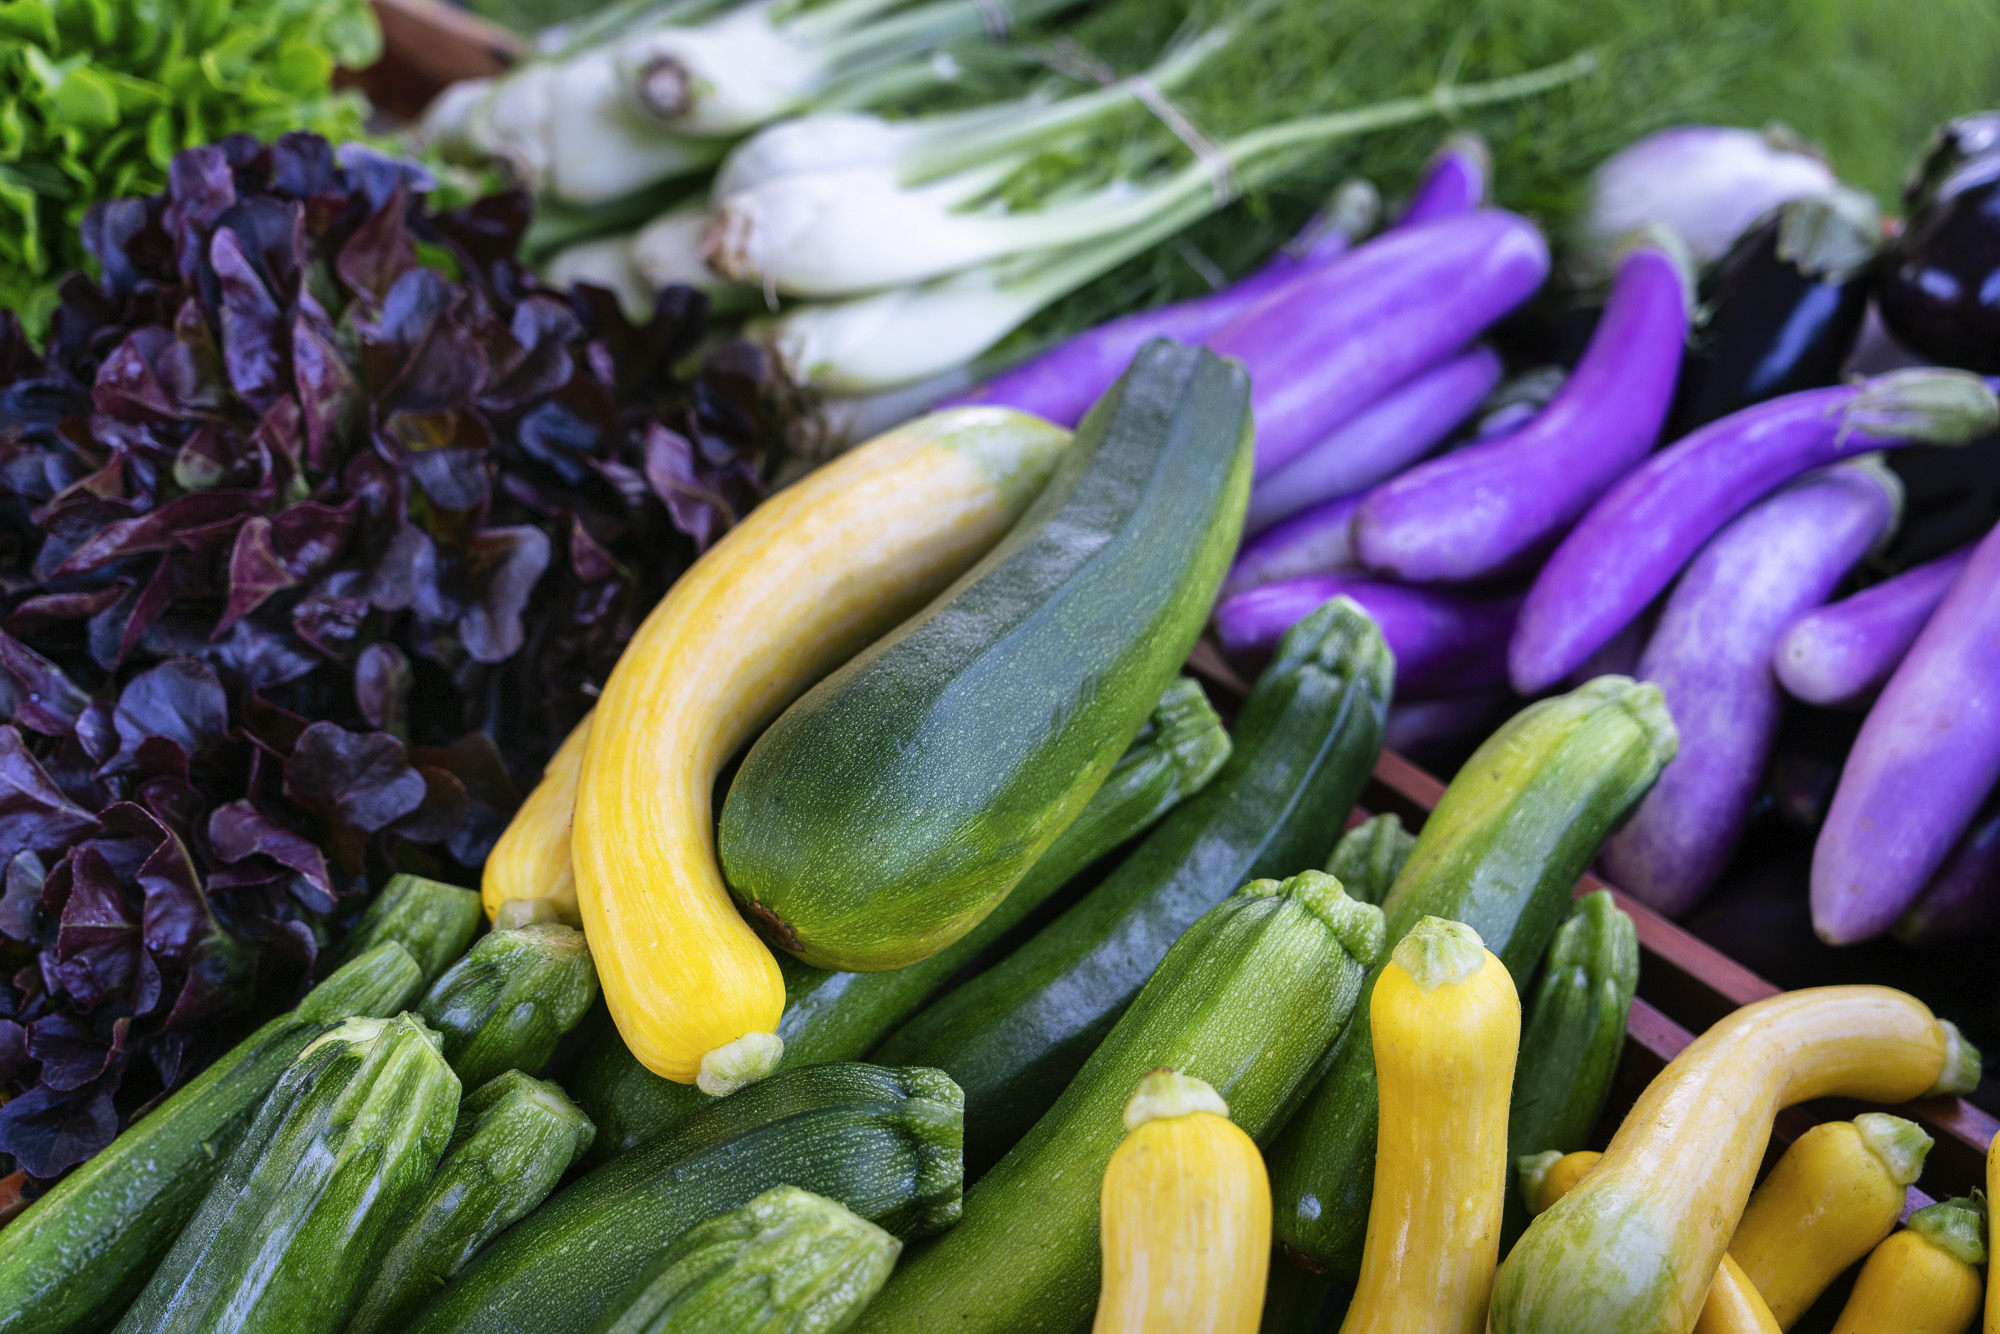 A photo of organic produce: squash, zucchini, and eggplants